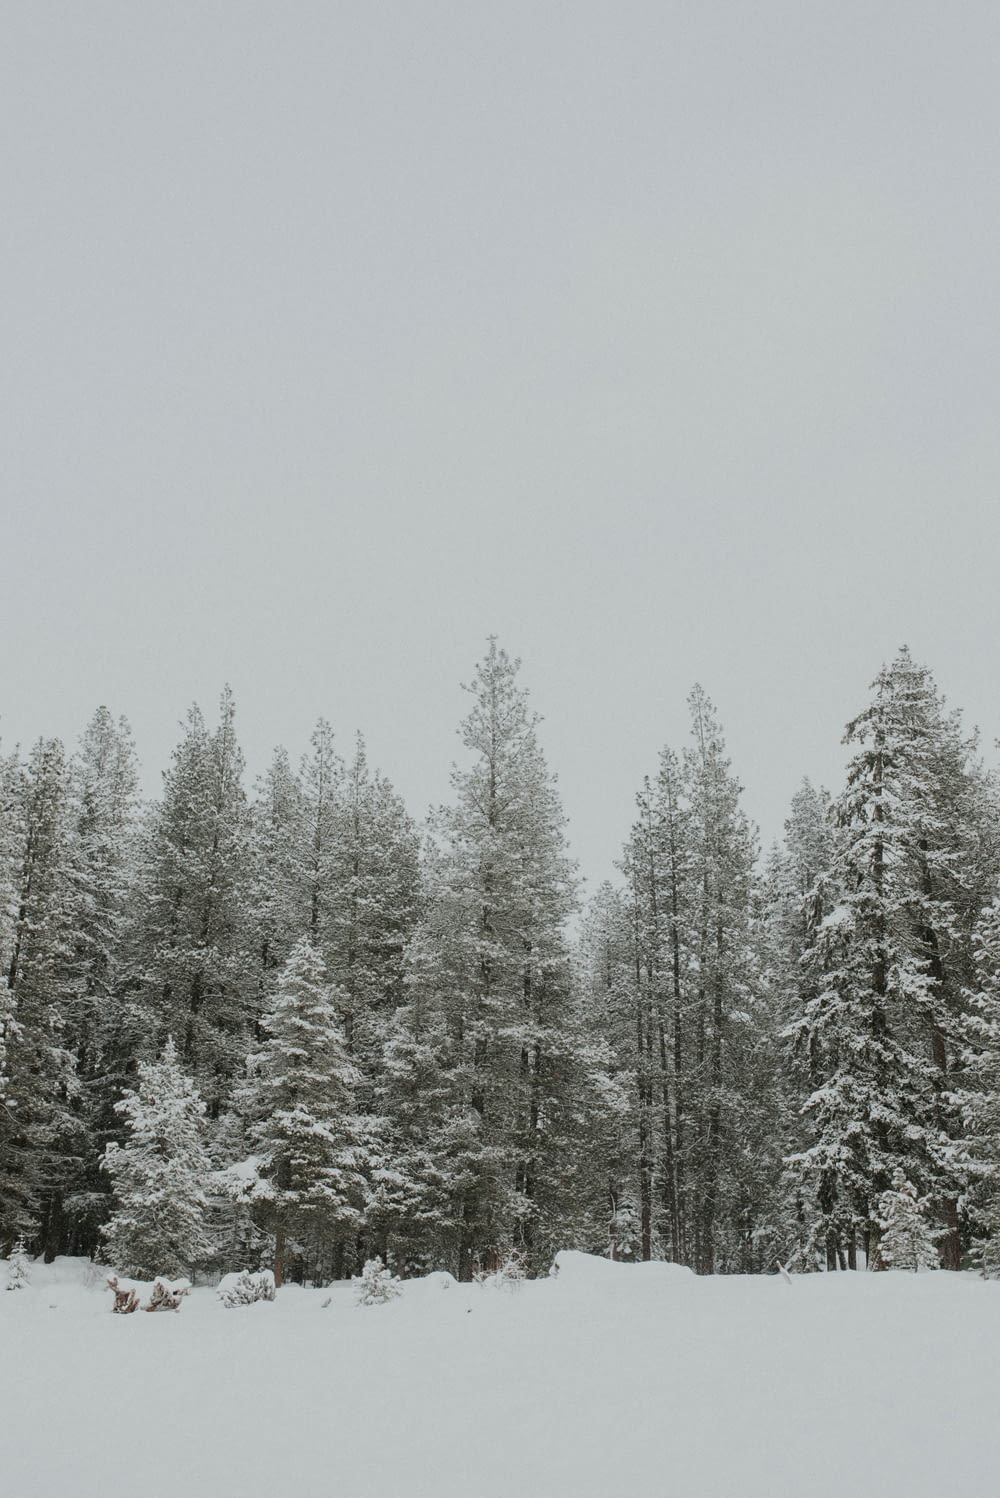 snow capped pine trees